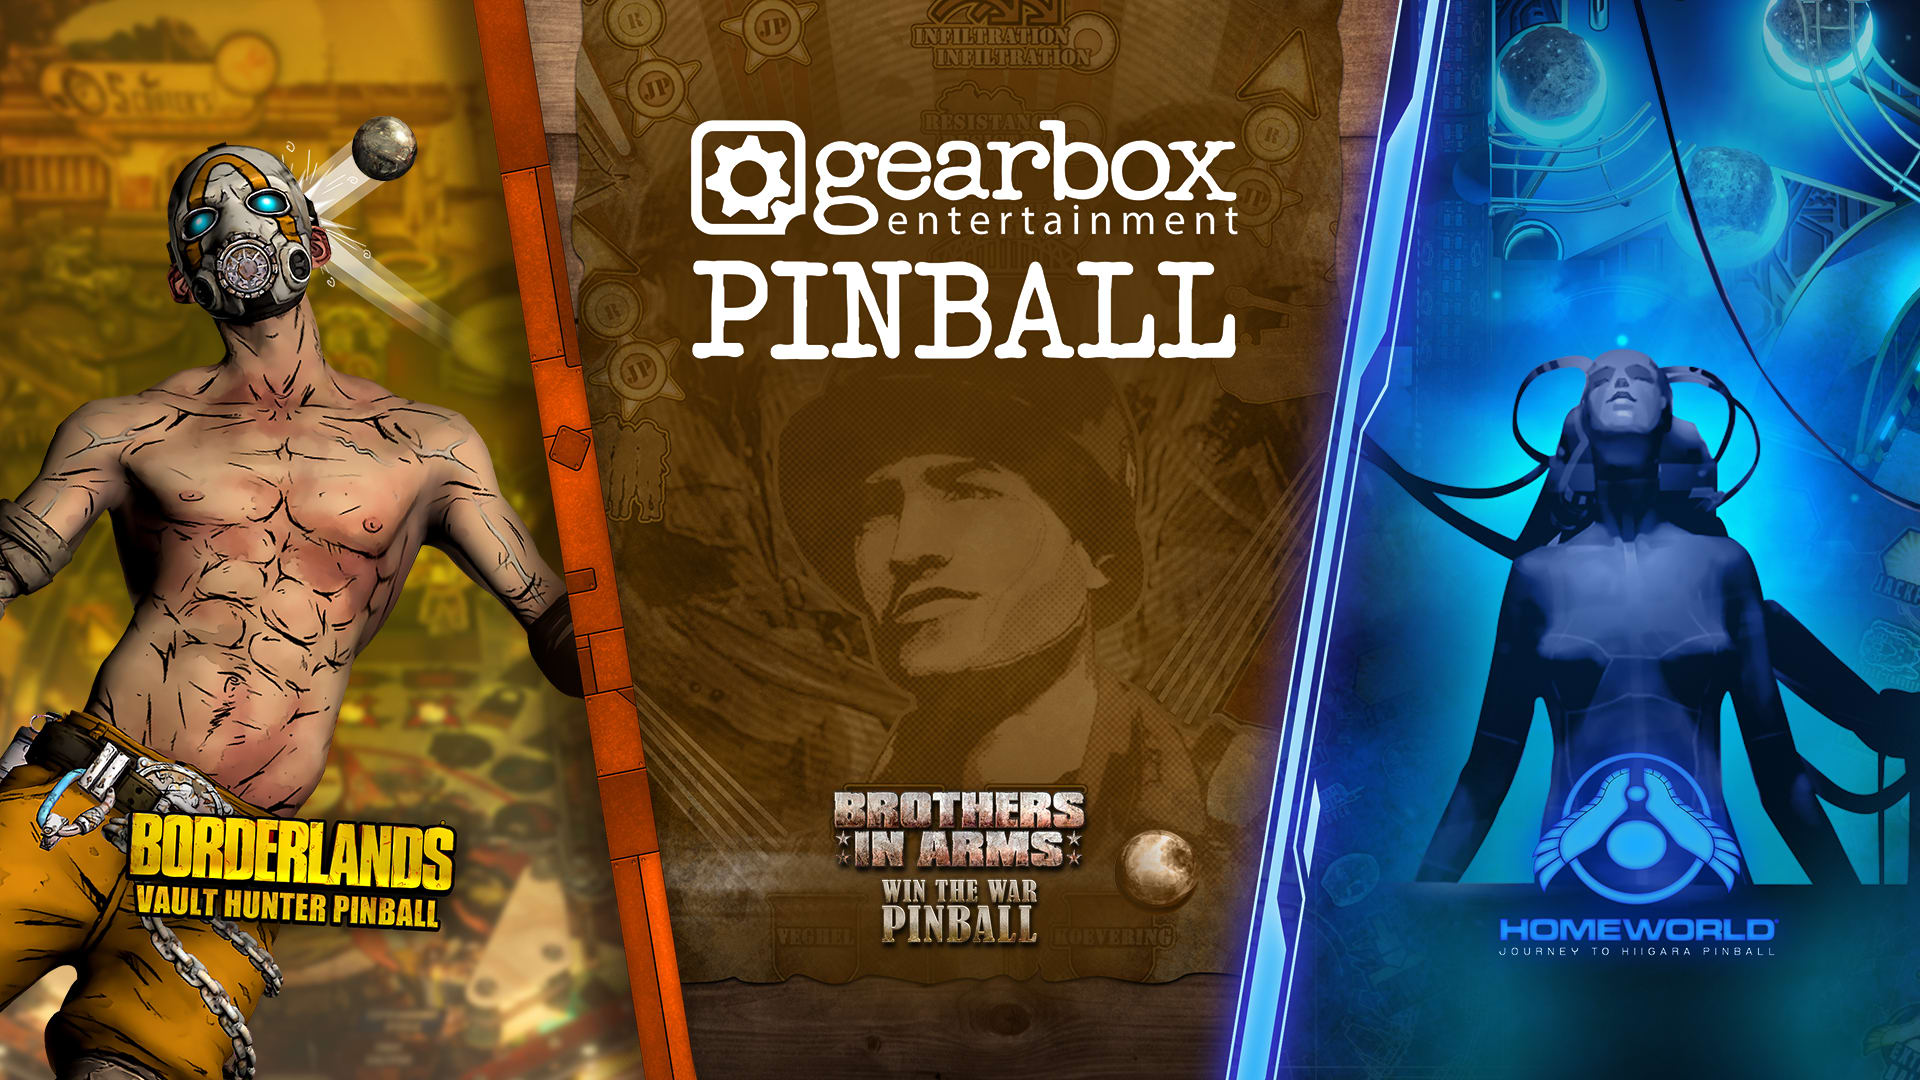 Pinball FX - Gearbox® Pinball